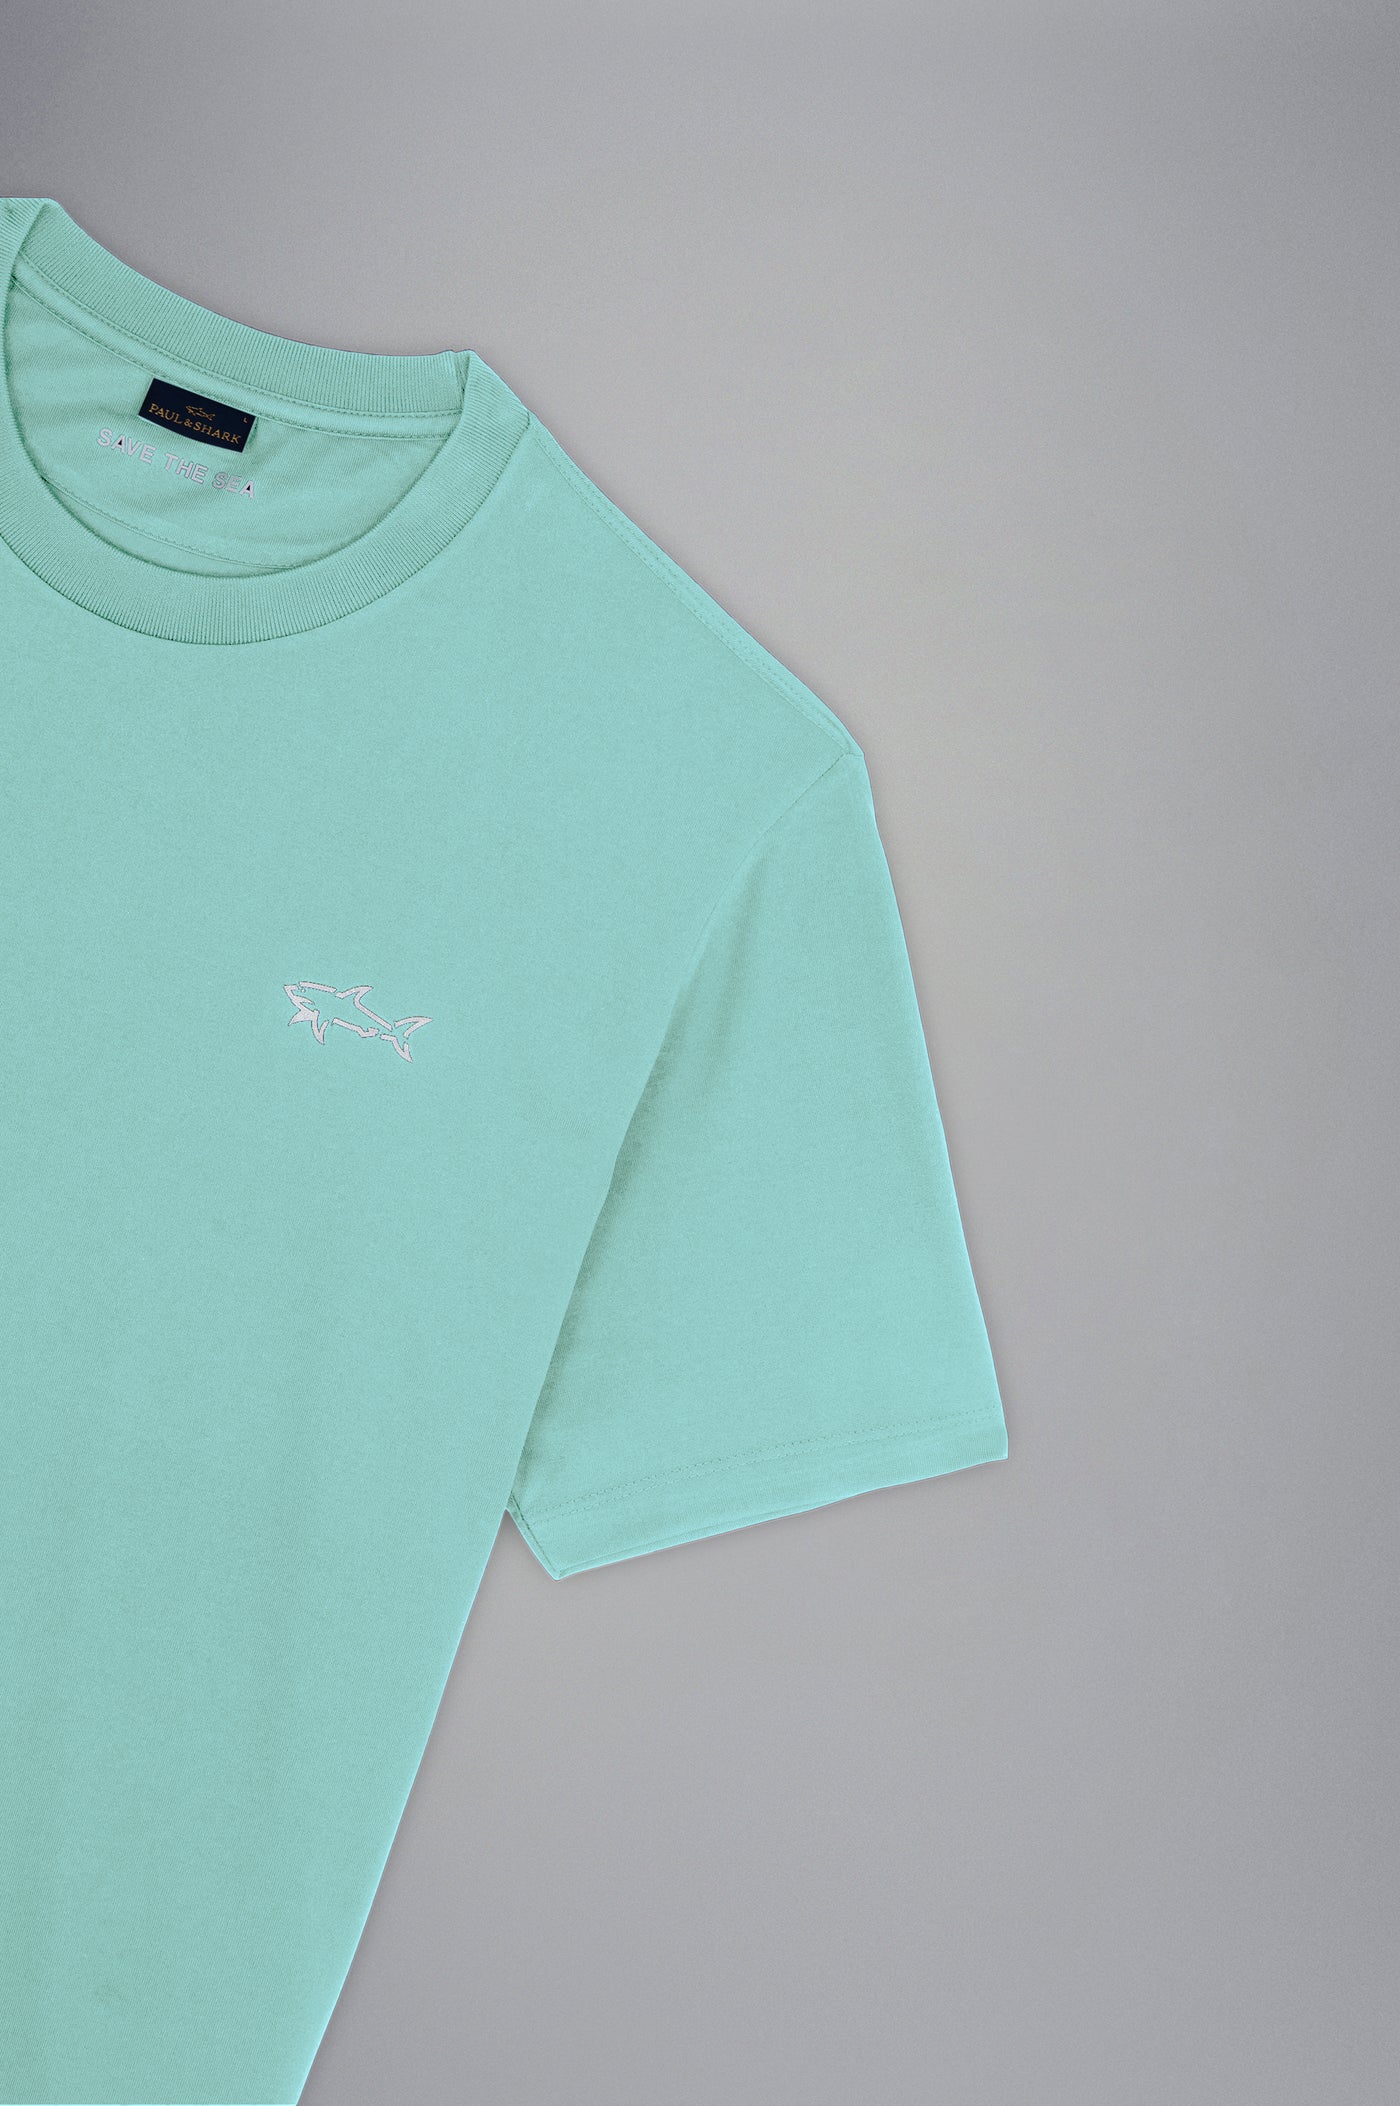 Paul & Shark Seaqual® Yarn T-shirt with Shark and Save the Sea Print | Turquoise